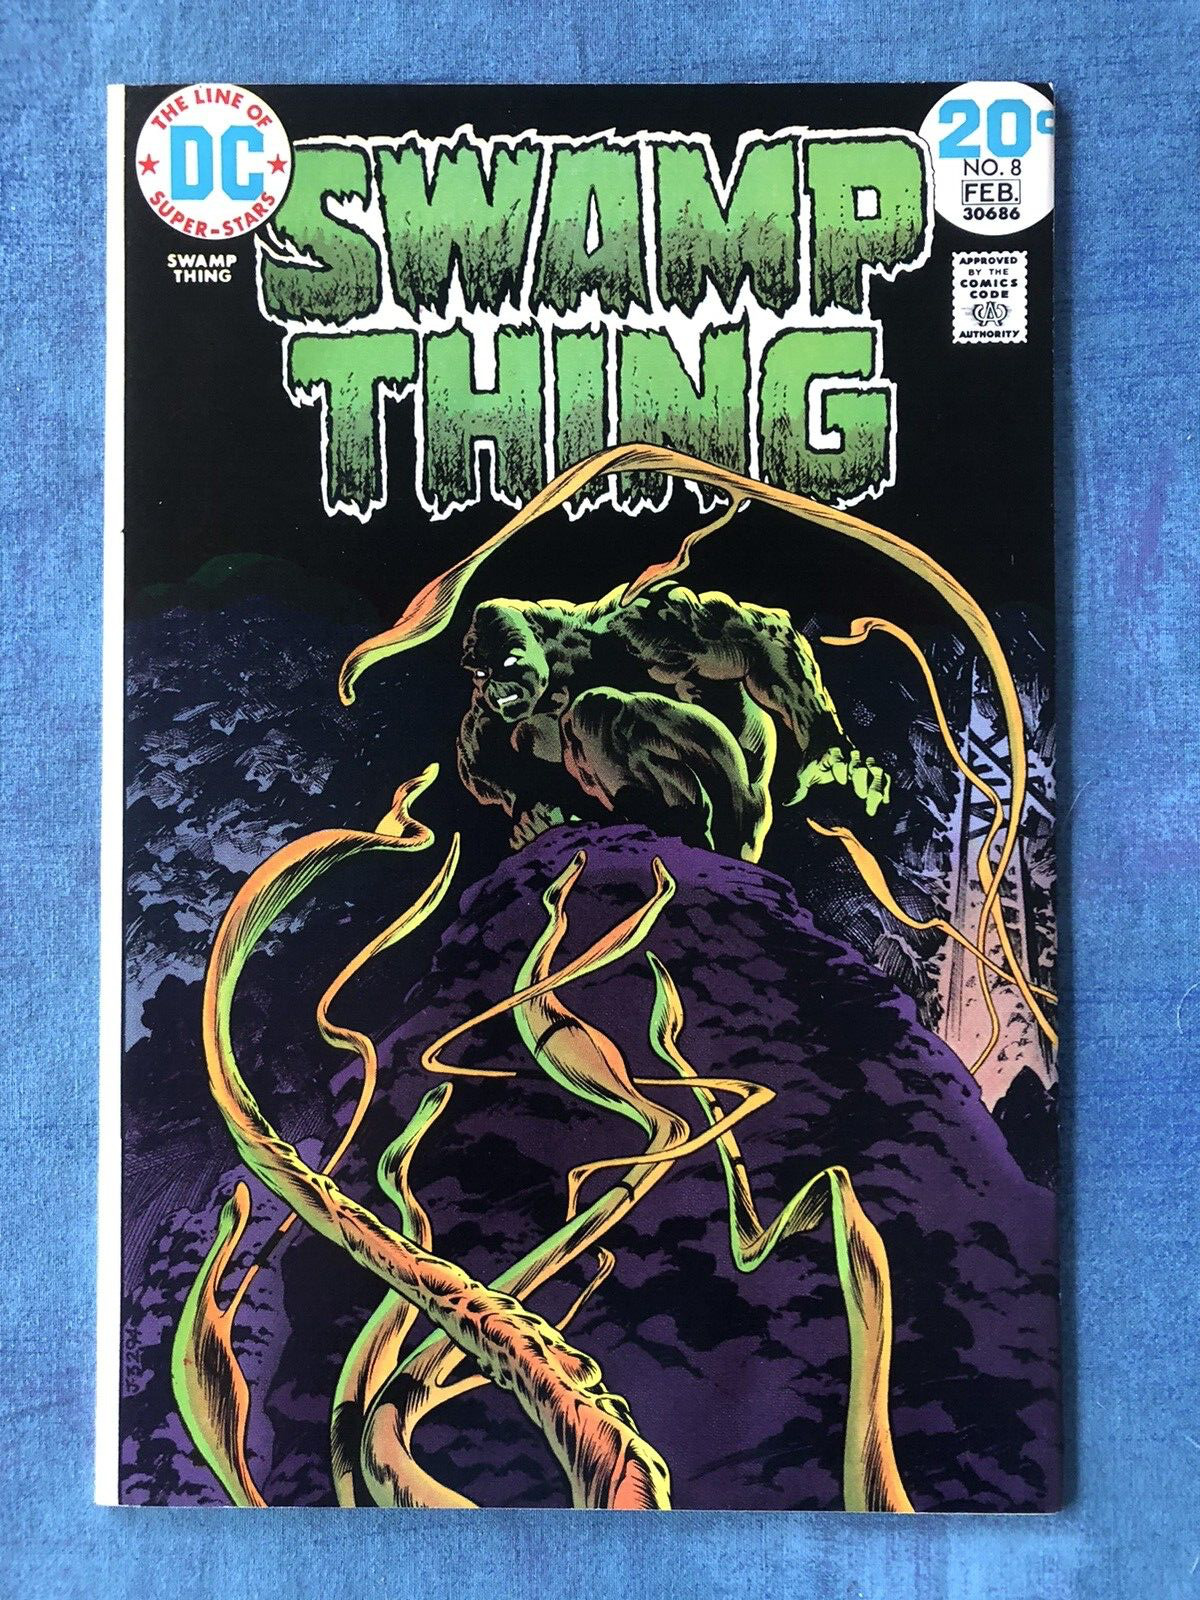 SWAMP THING #8 - DC Comics 1974 - Bernie Wrightson  - VF - HIGH-GRADE